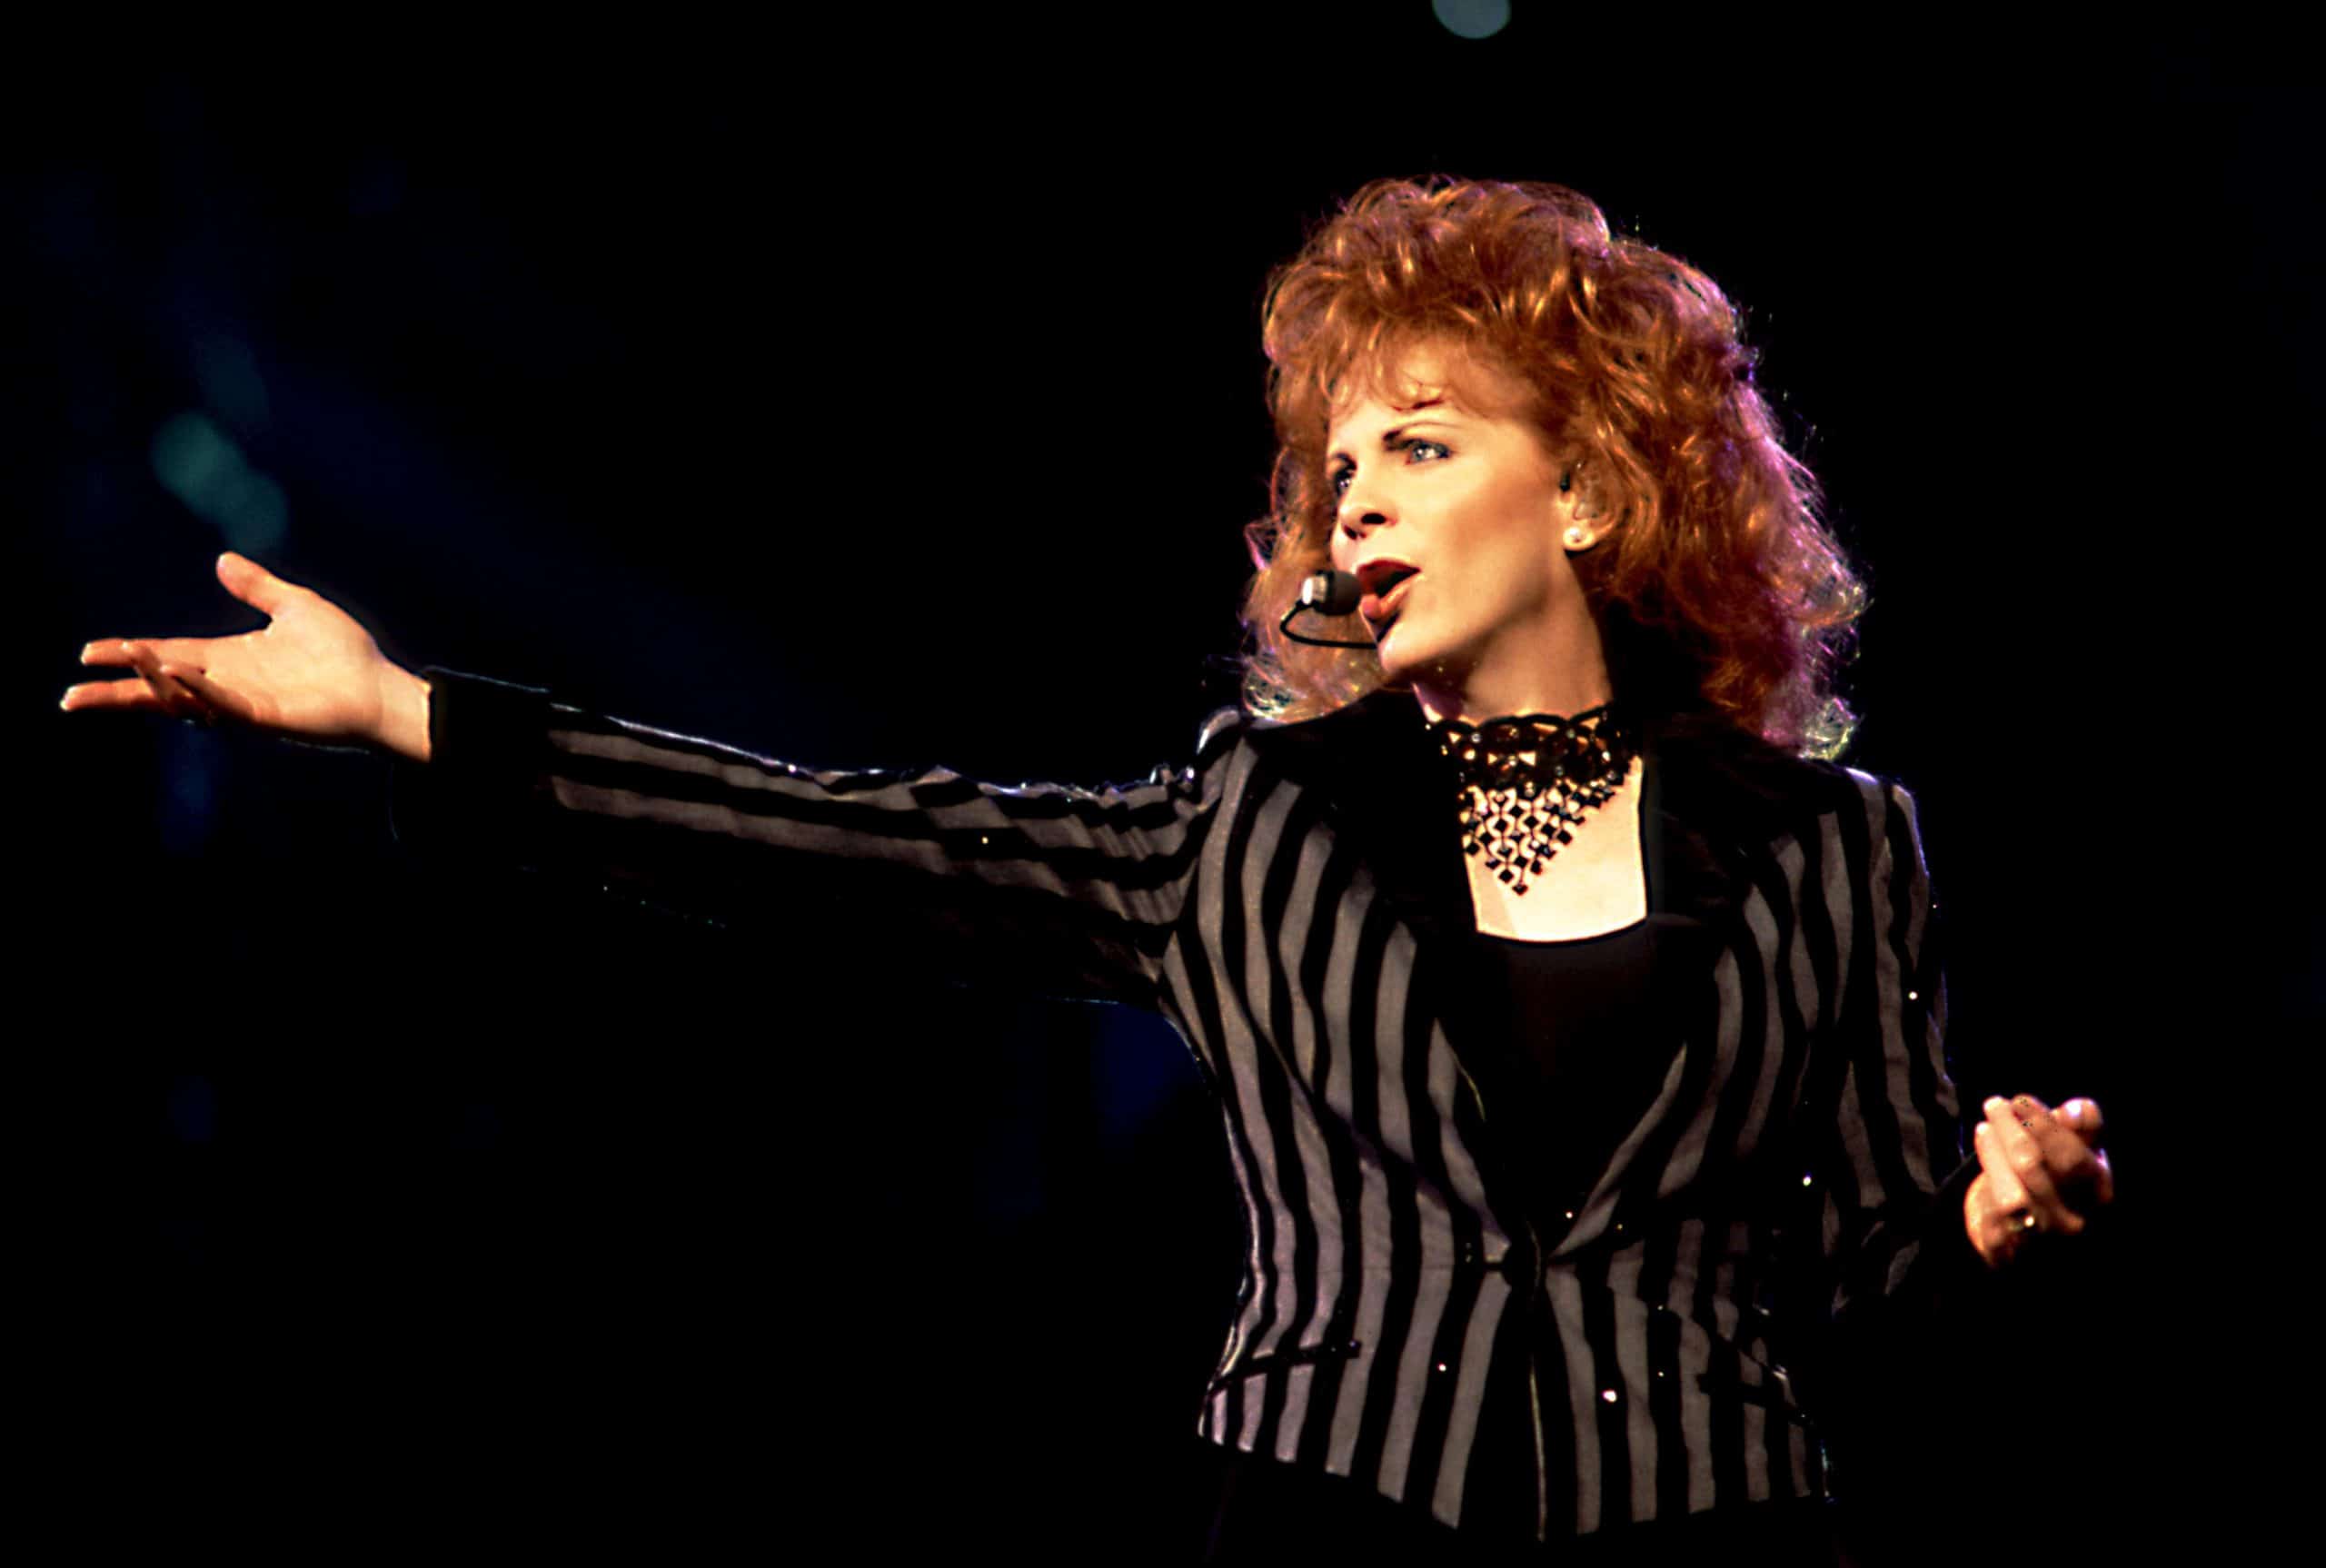 reba mcentire performing in 1990s